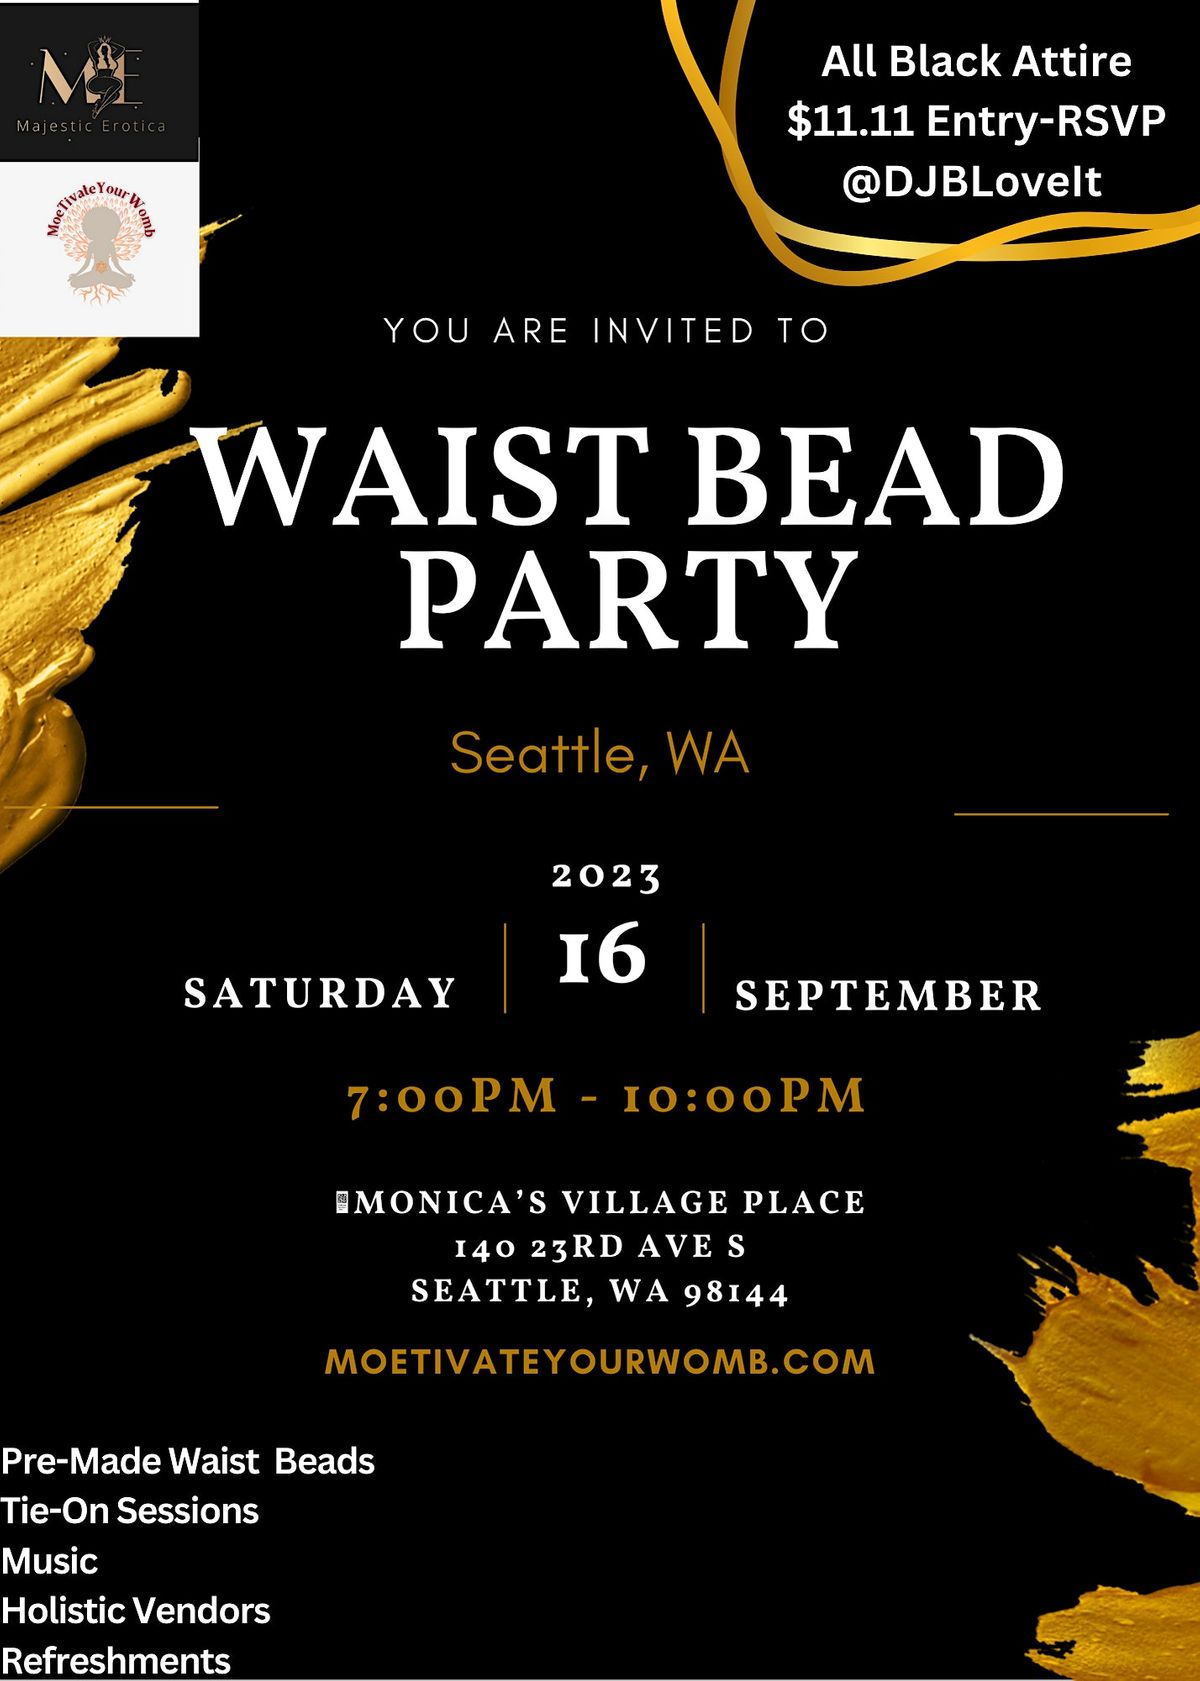 Waist Bead Party (Seattle, WA)